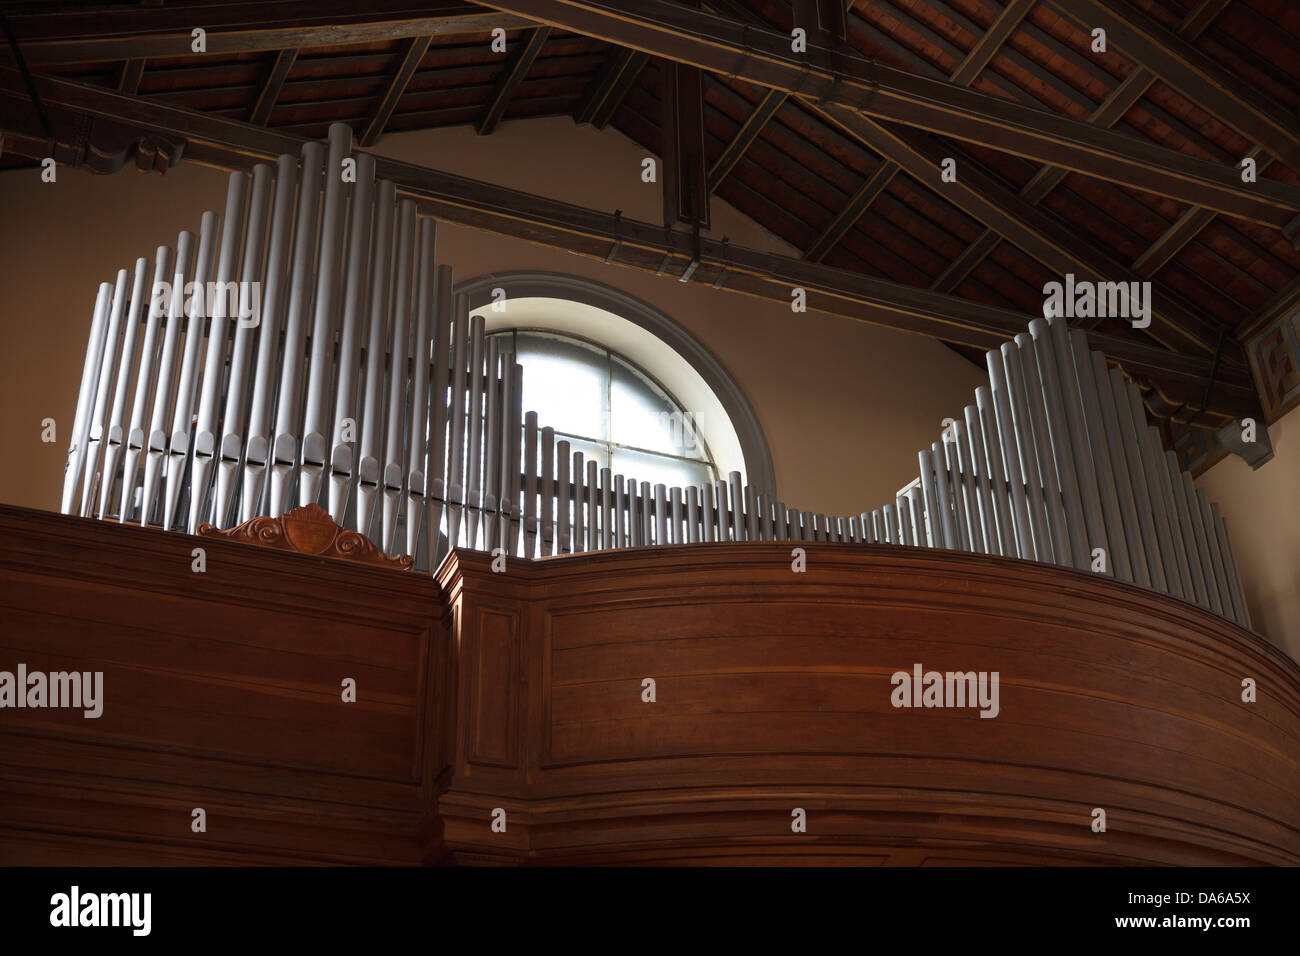 Organ of the Sanctuary of Castelmonte, Friuli,Italy Stock Photo